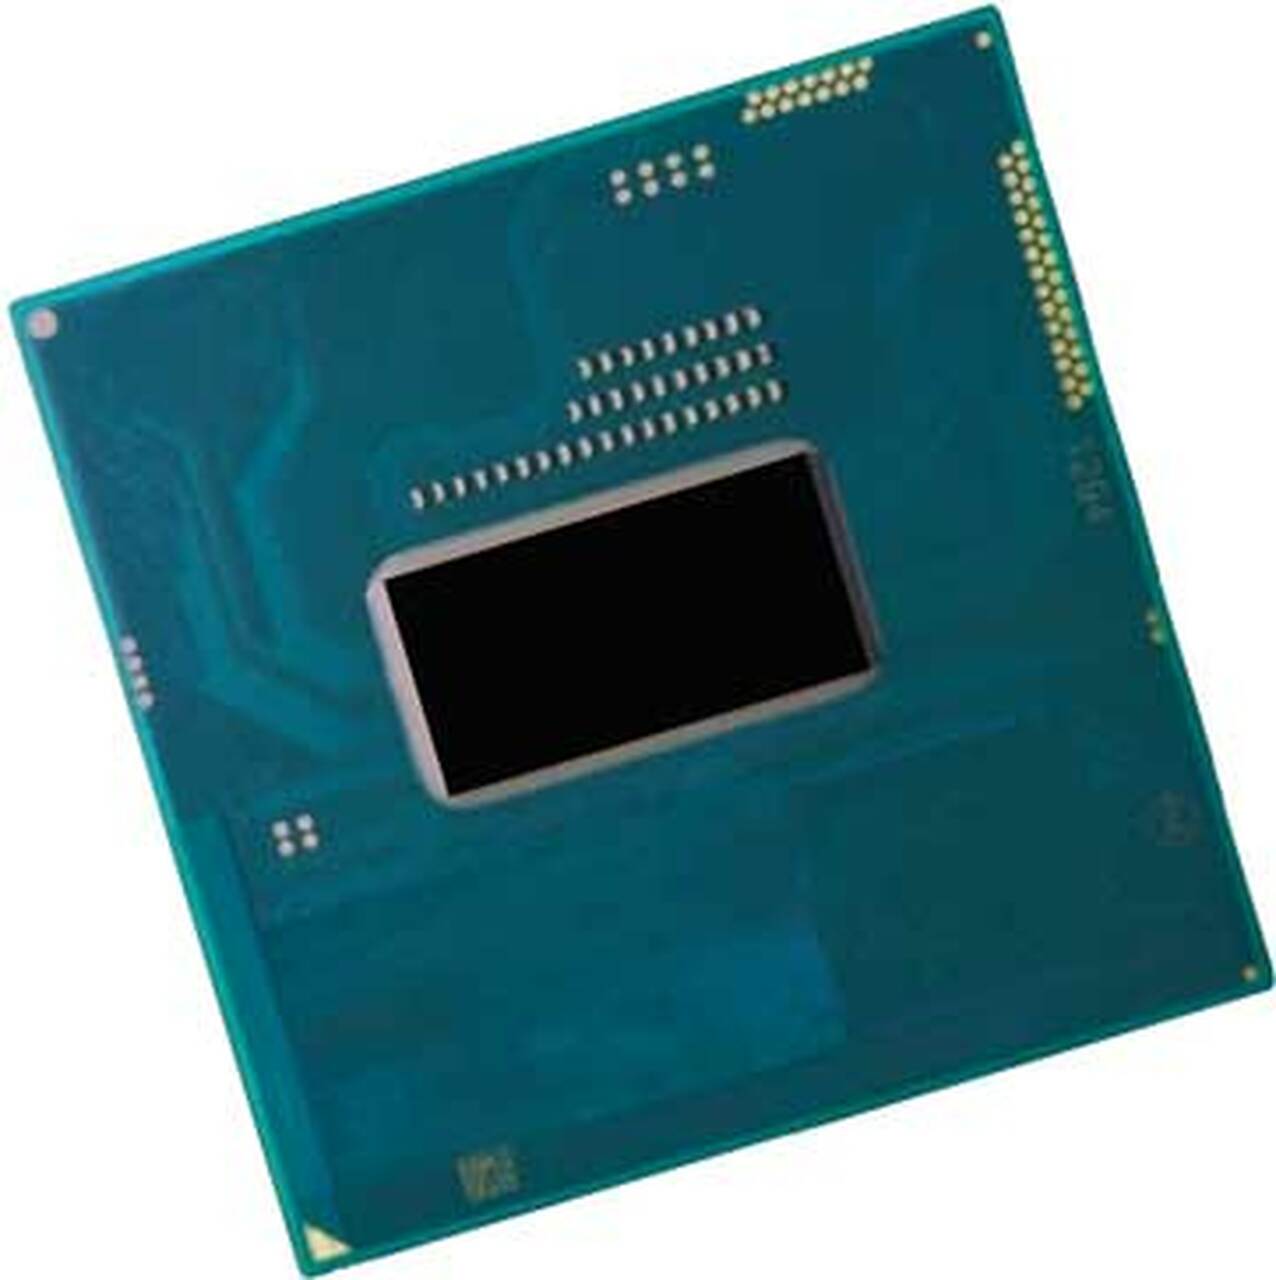 Процессор Intel i3-4000m, 2.4Ггц*2 (4 потока), 3 МБ кэш-памяти, socket FCPGA946 (не проверен)